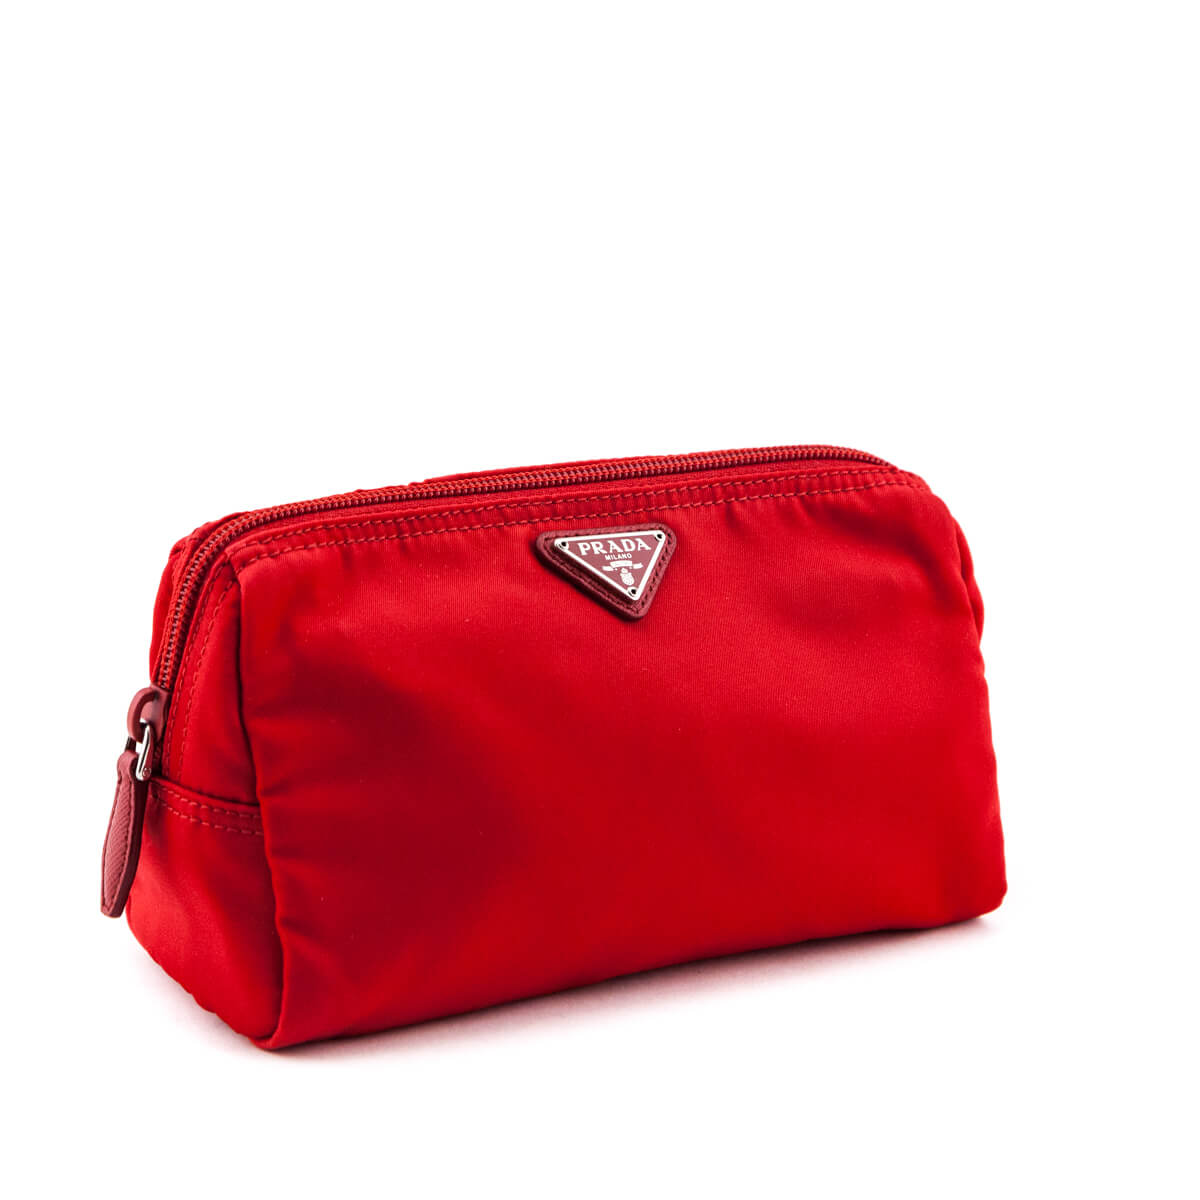 Prada Rosso Nylon Zip Pouch - Love that Bag etc - Preowned Authentic Designer Handbags & Preloved Fashions